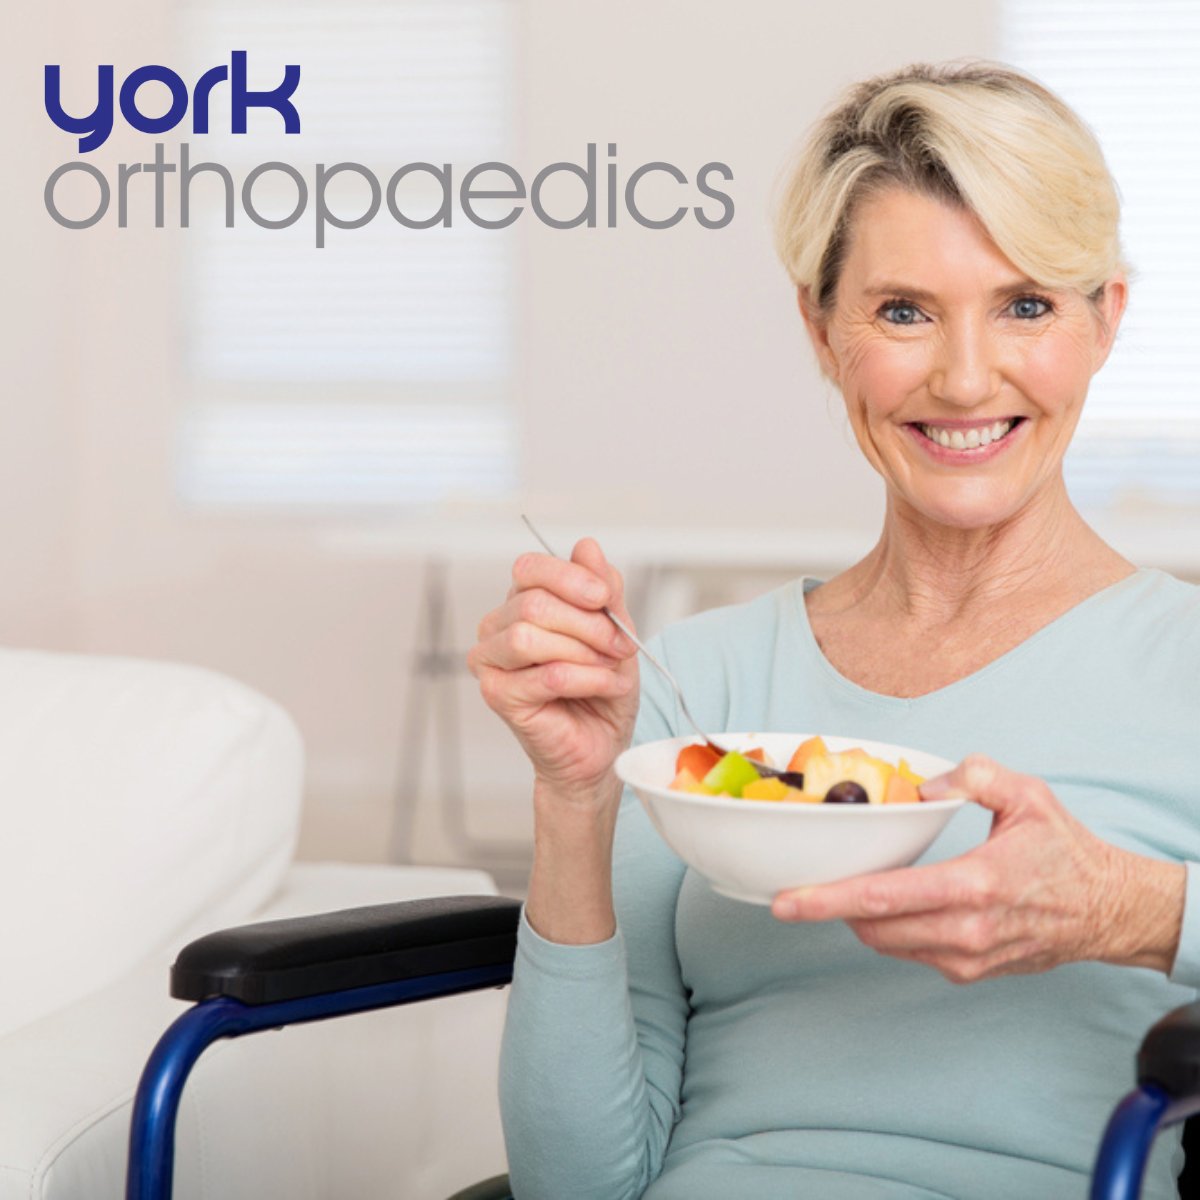 Check out our latest blog :
yorkorthopaedics.co.uk/prehabilitatio…
Appointments: yorkorthopaedics.co.uk/contact/
T | 01904 373032
W | yorkorthopaedics.co.uk
#aboutus #orthopaedics #orthopaedicsurgeon